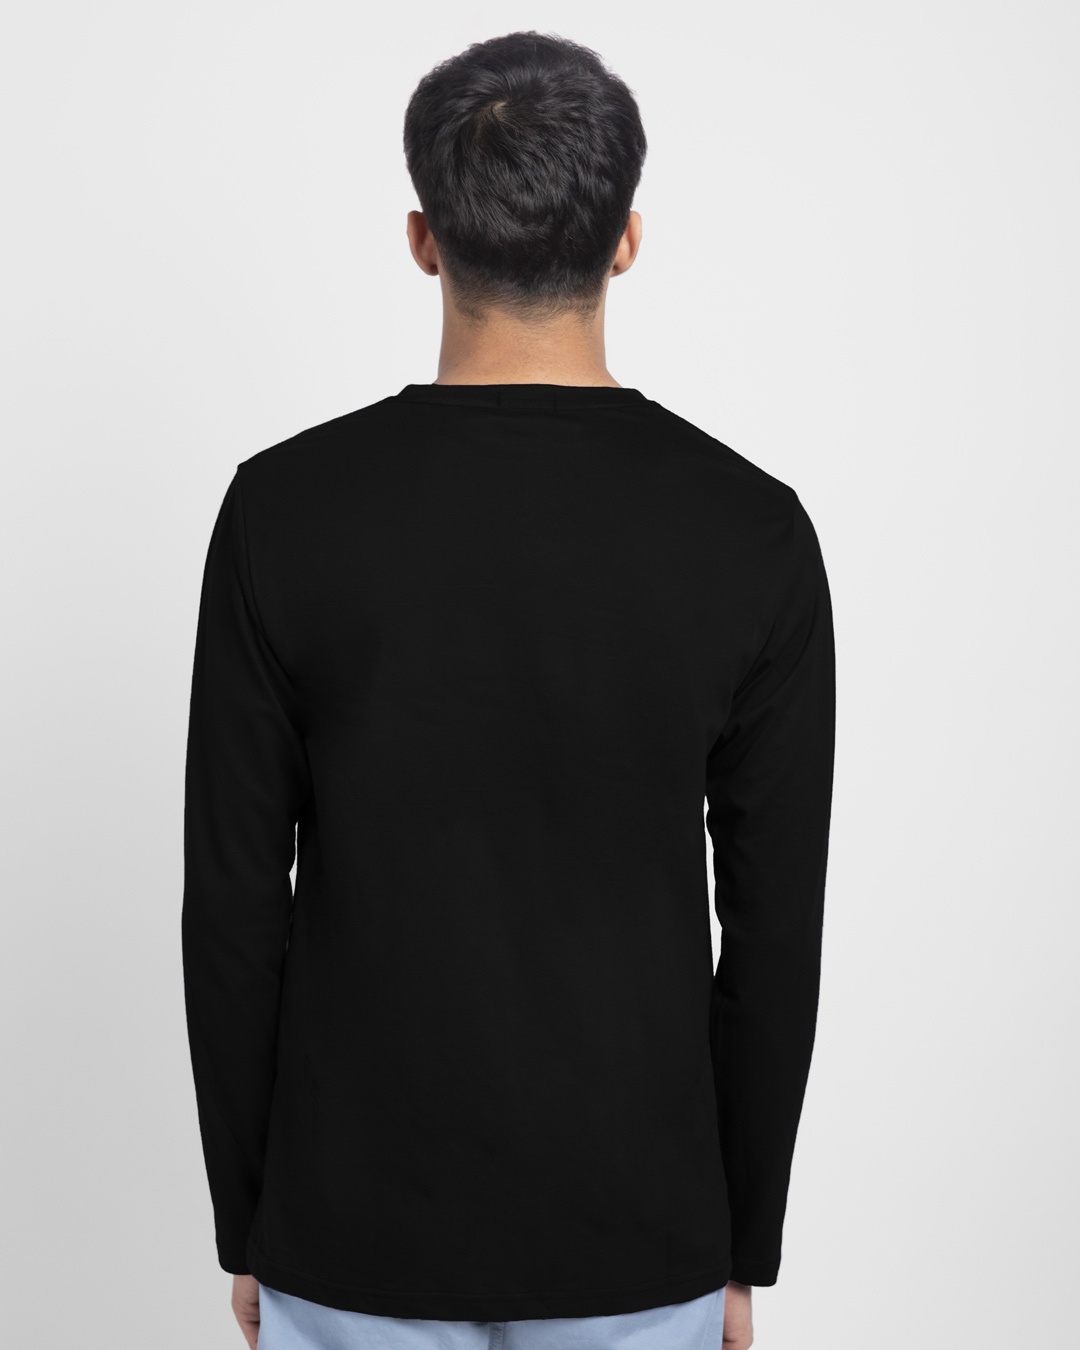 Buy Express Yourself Full Sleeve T-Shirt for Men black Online at Bewakoof